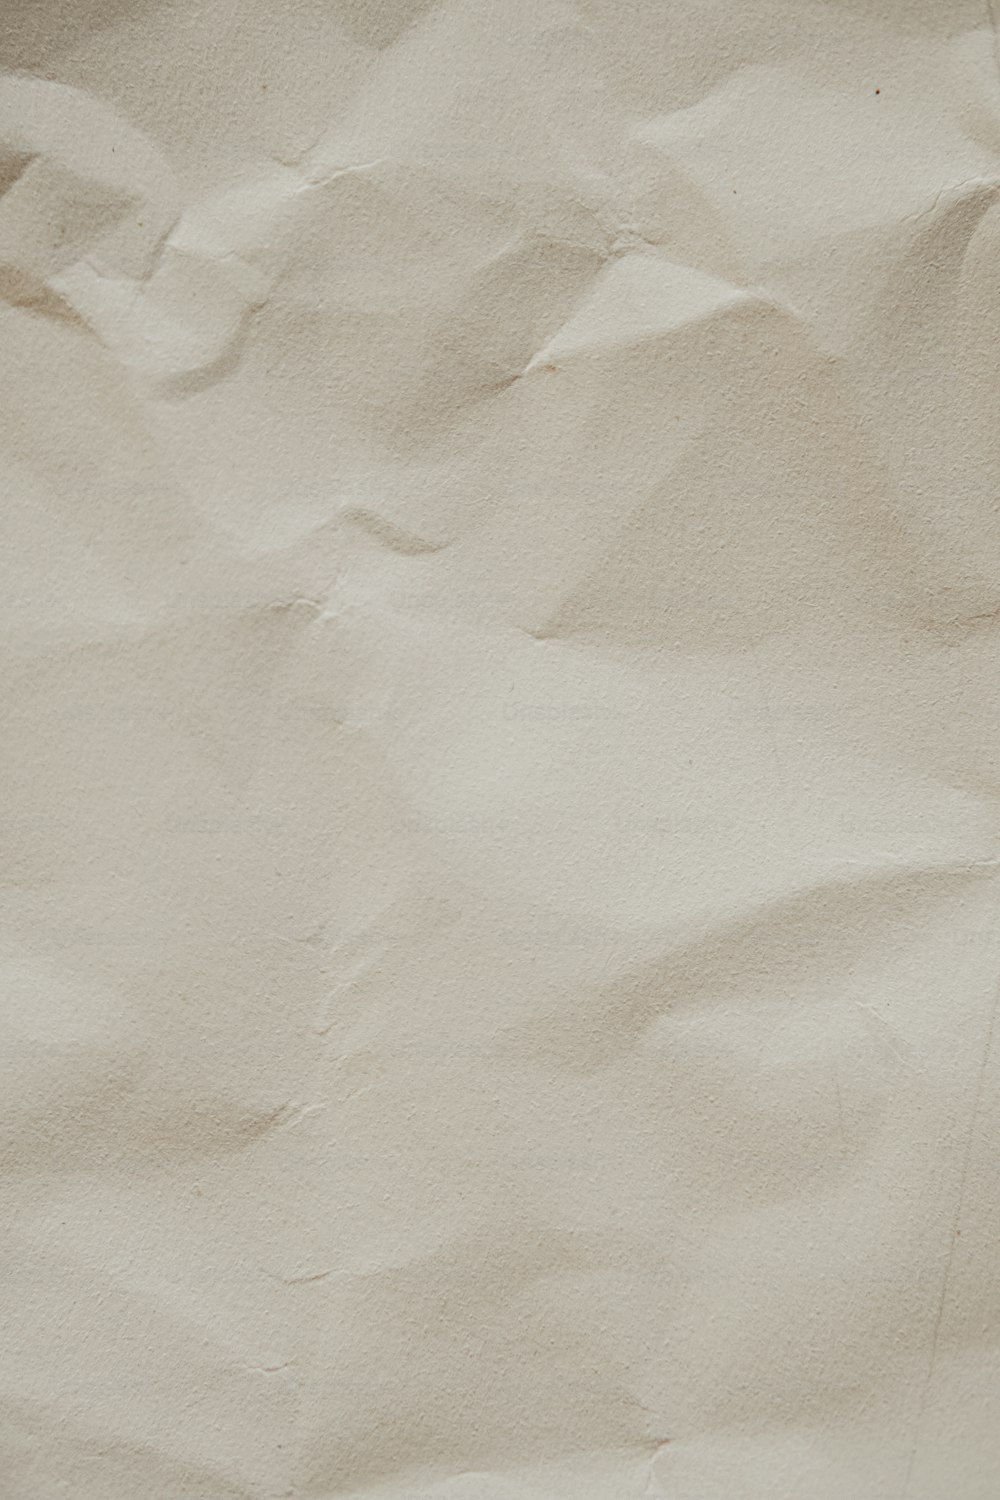 Premium Photo  Paper white texture background